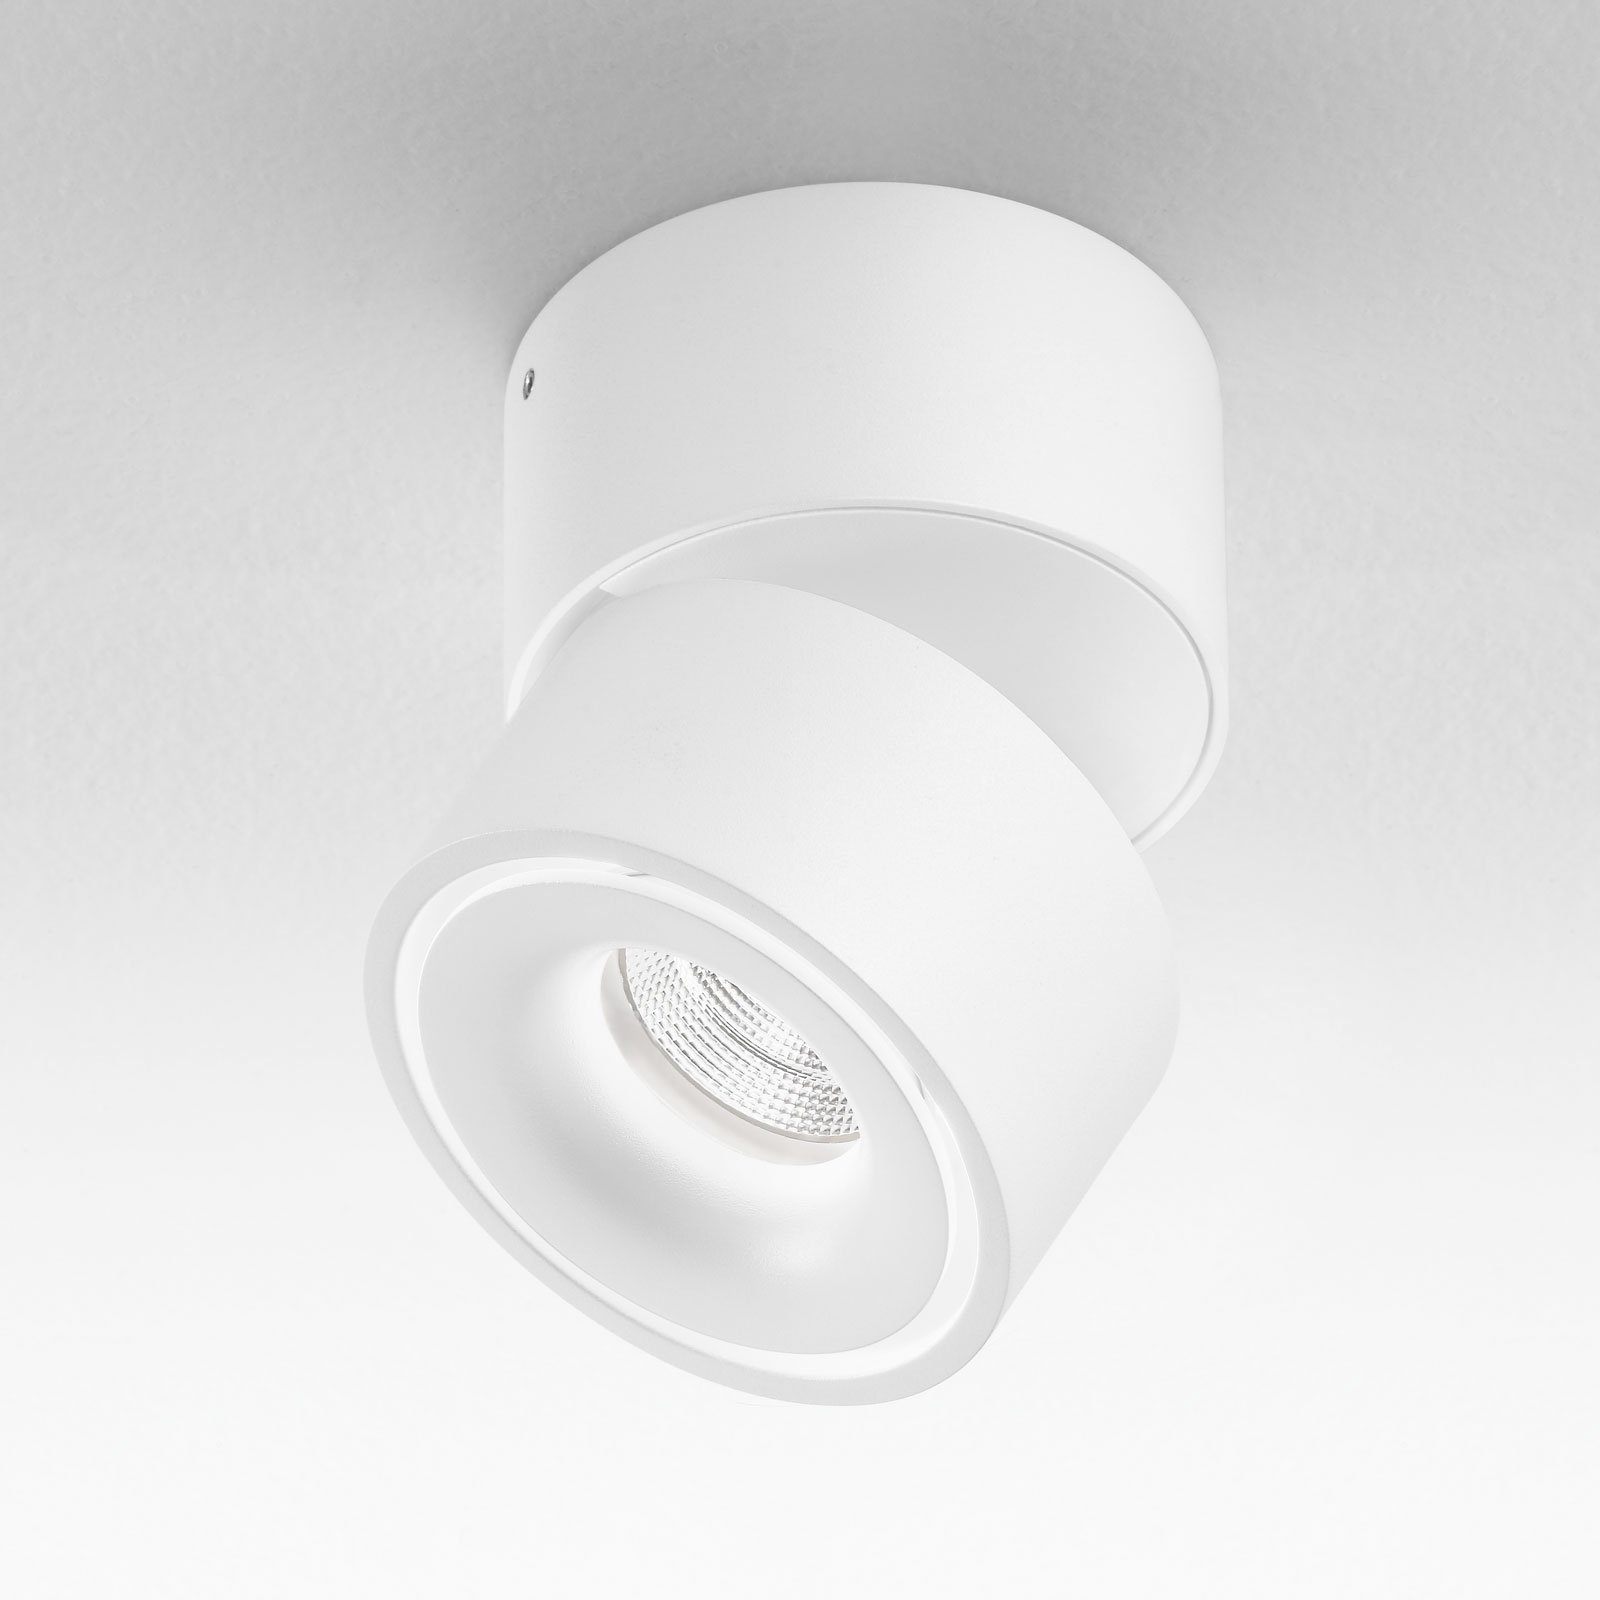 Egger Clippo spot sufitowy LED, biały, 3 000 K